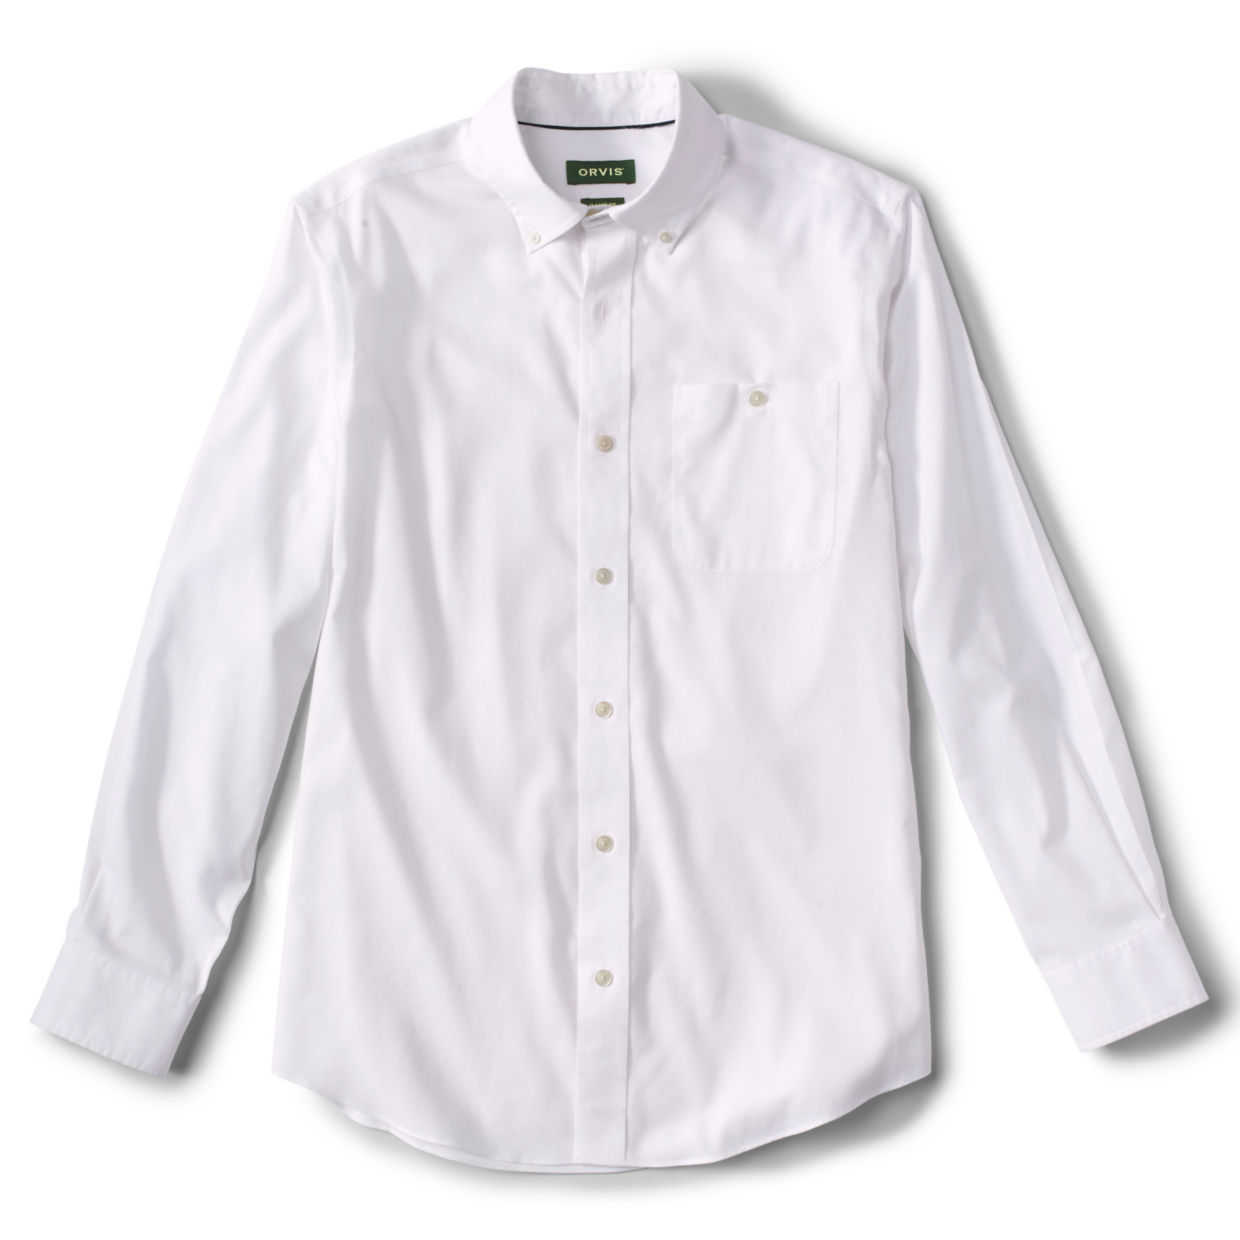 Men's No-Work, Work Wrinkle-Free Shirt White Size Medium Cotton Orvis